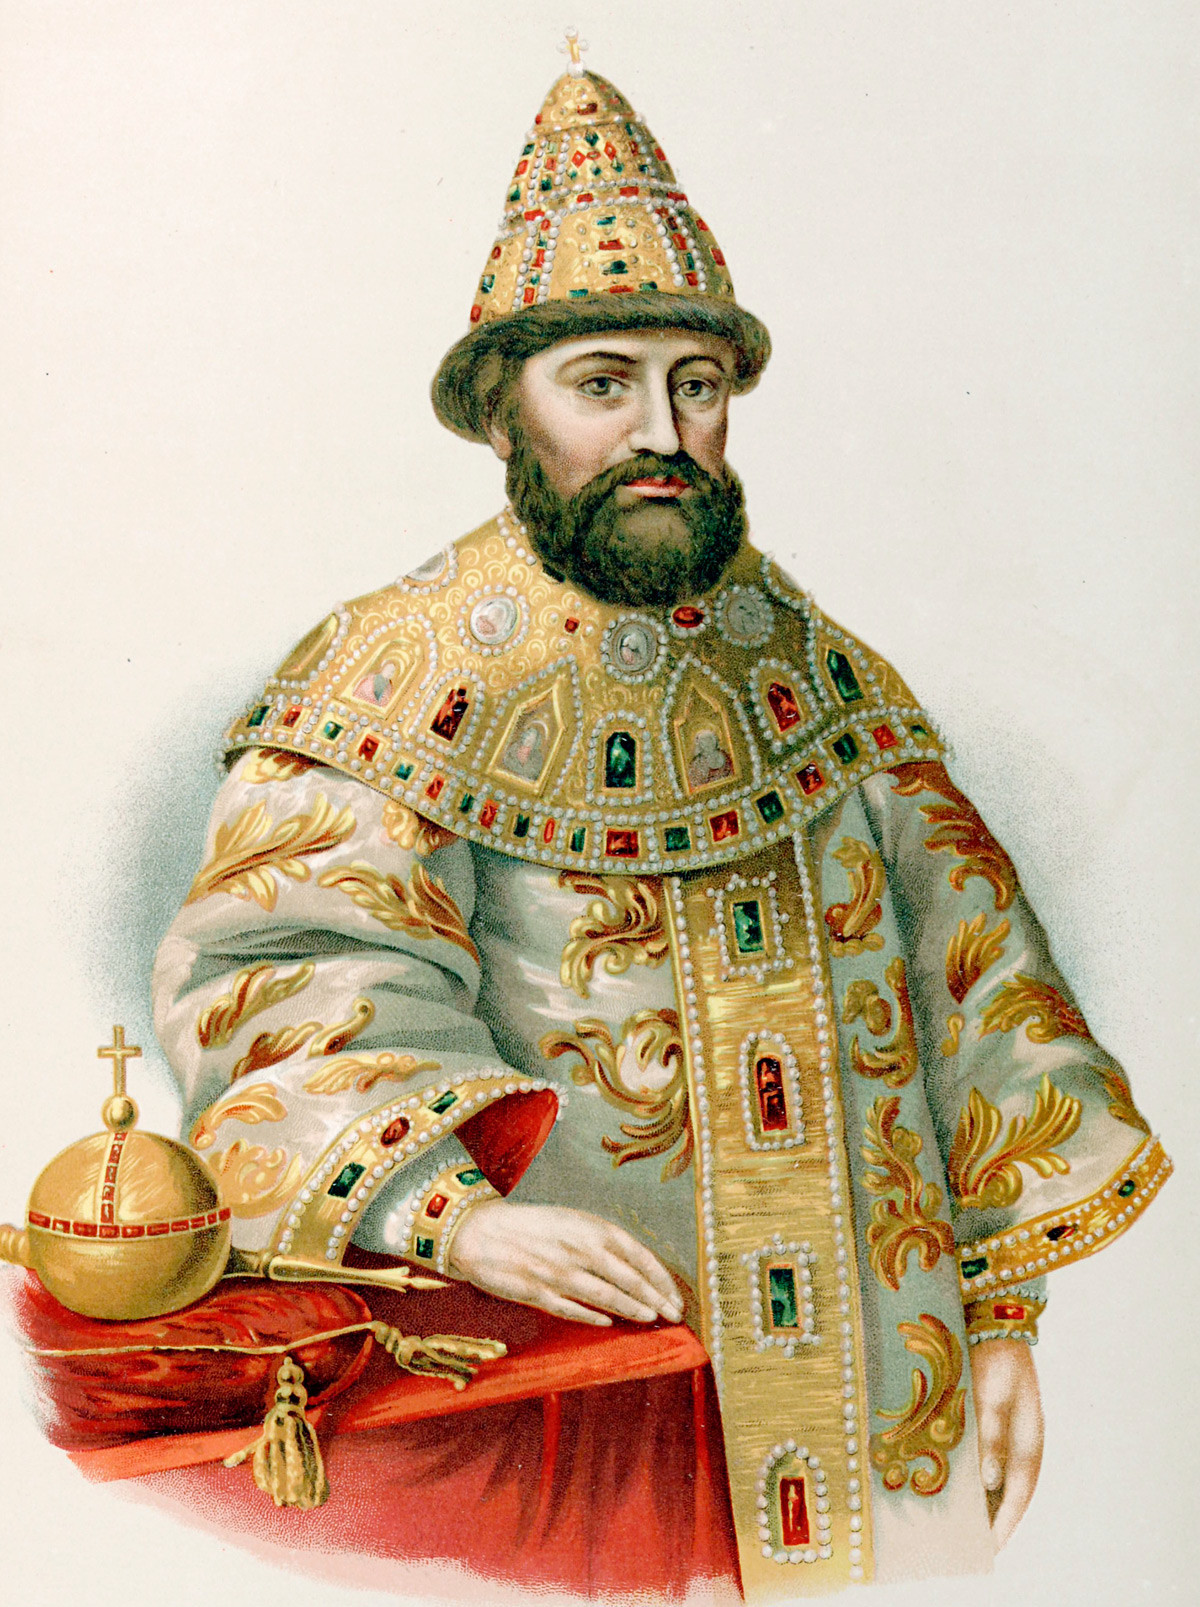 Mihail Fjodorovič (12. srpnja 1596. - 13. srpnja 1645.), prvi ruski car dinastije Romanov.

